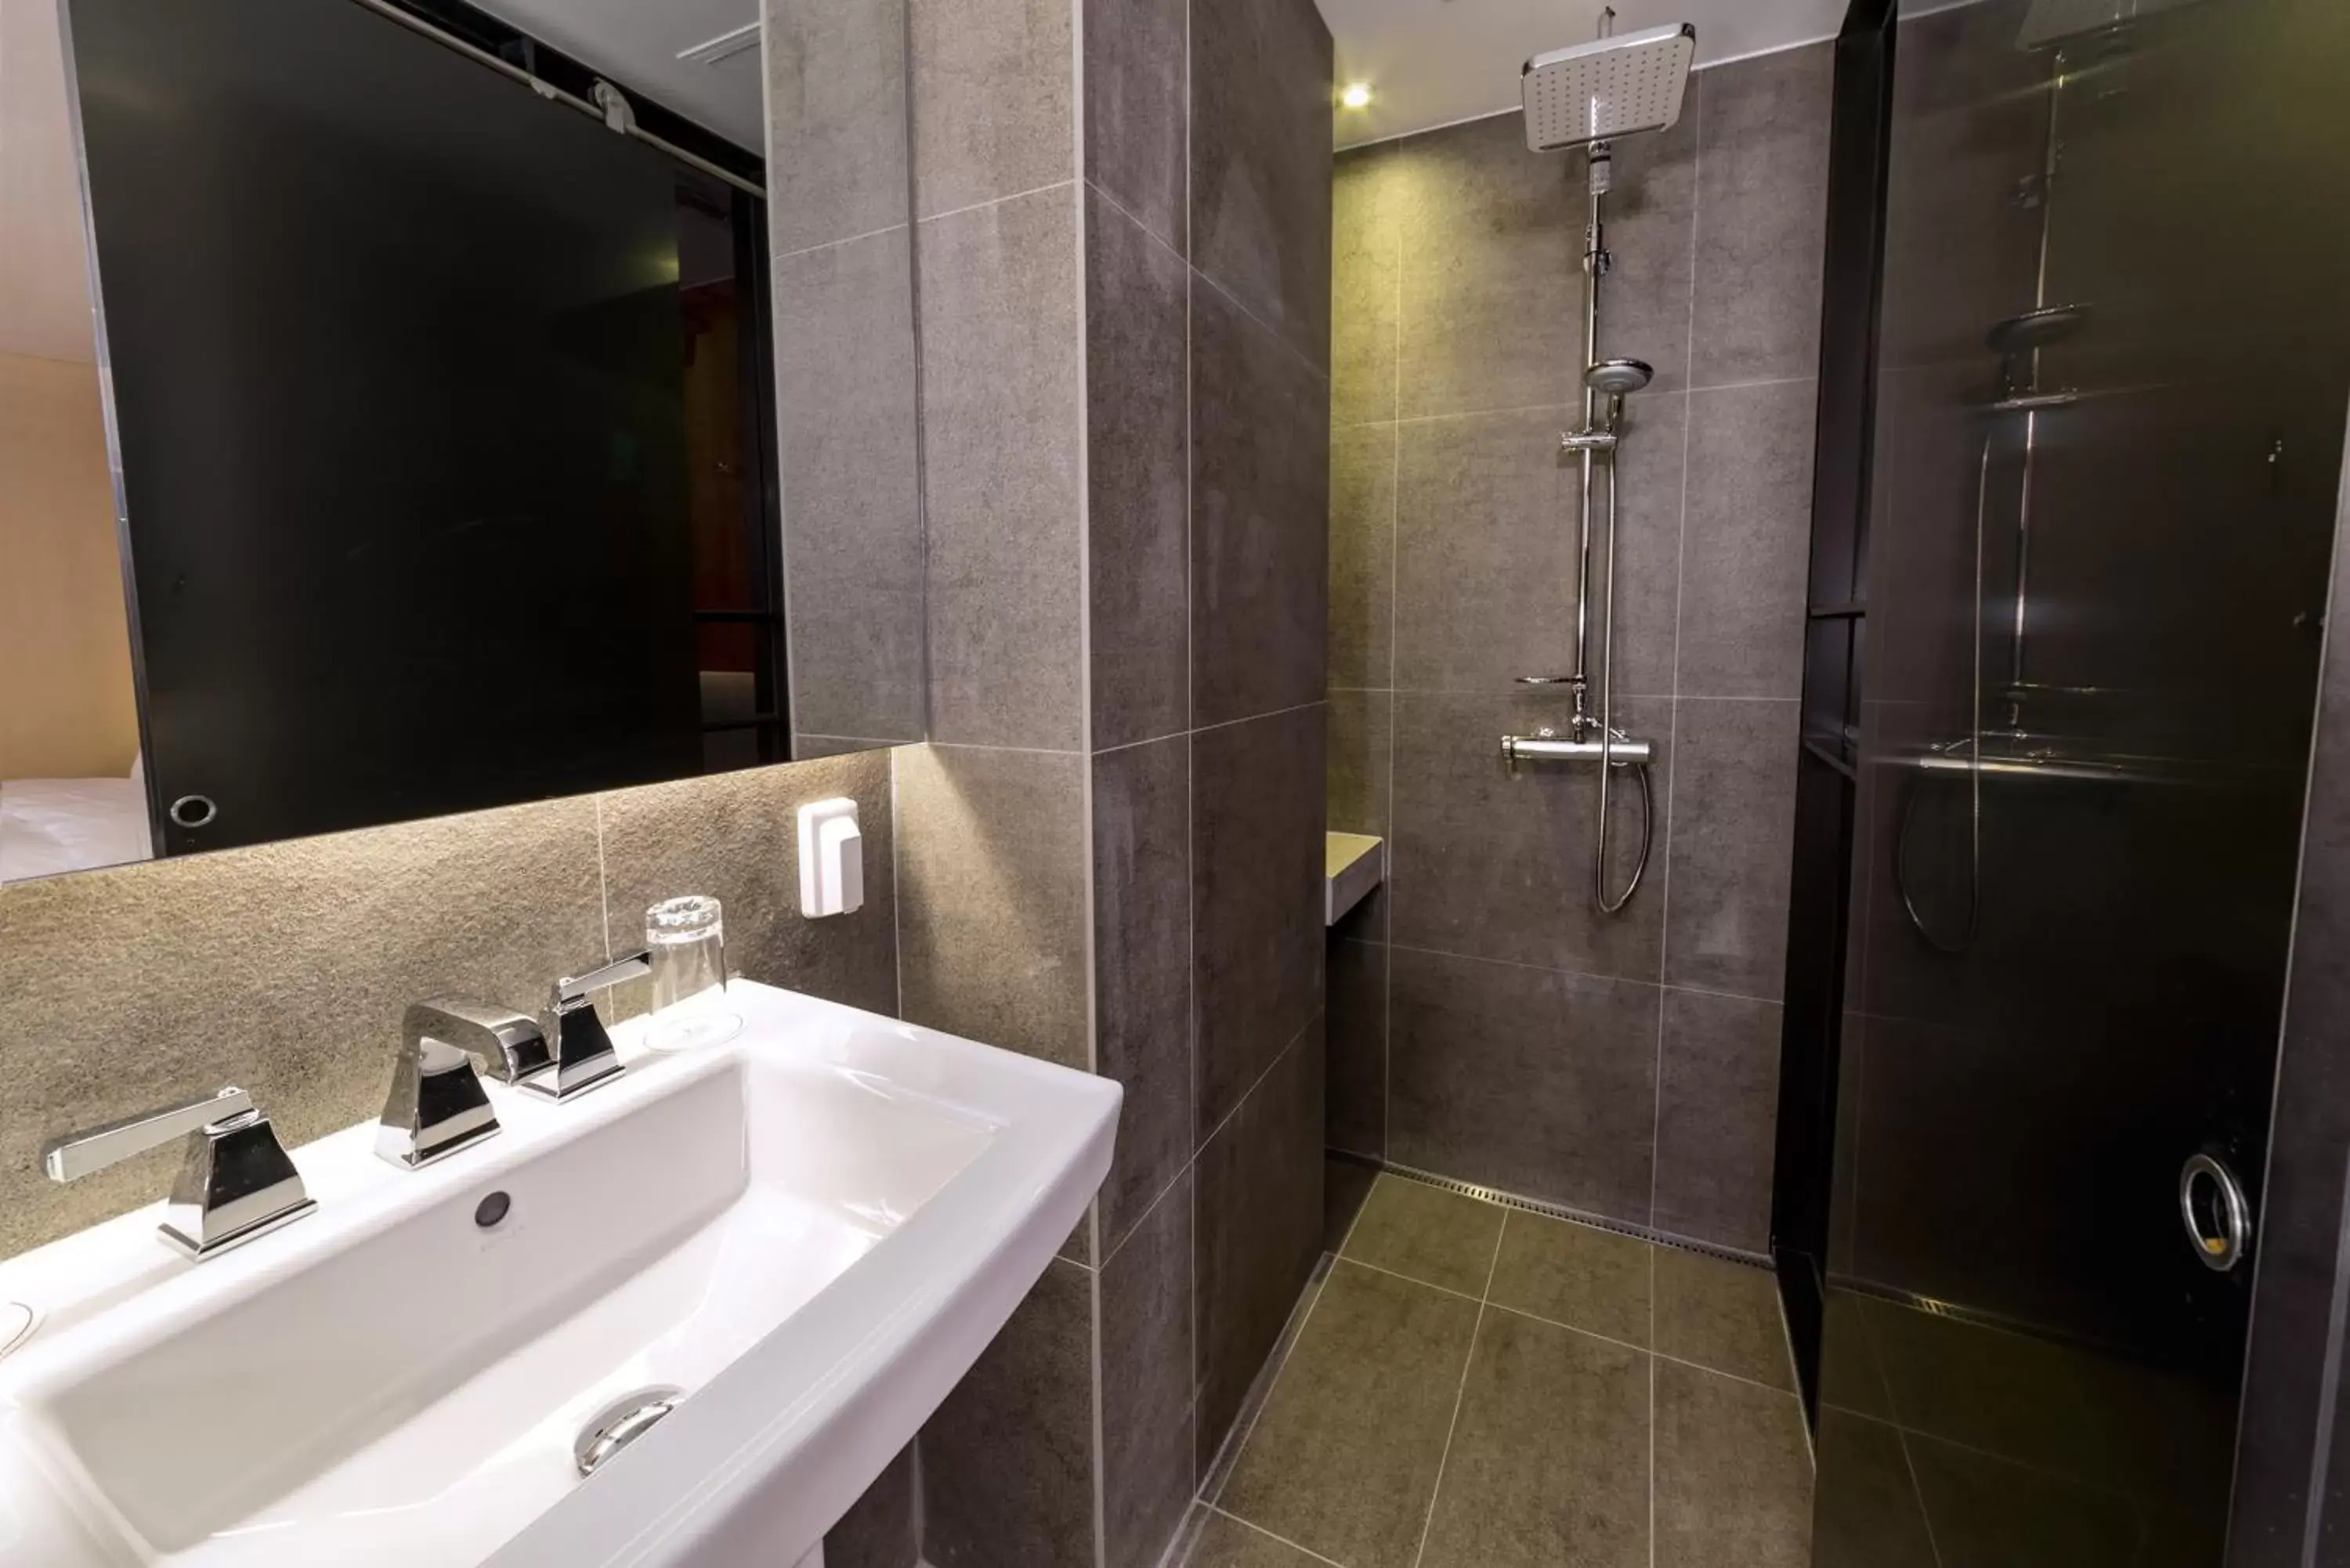 Area and facilities, Bathroom in Capace Hotel Gangnam